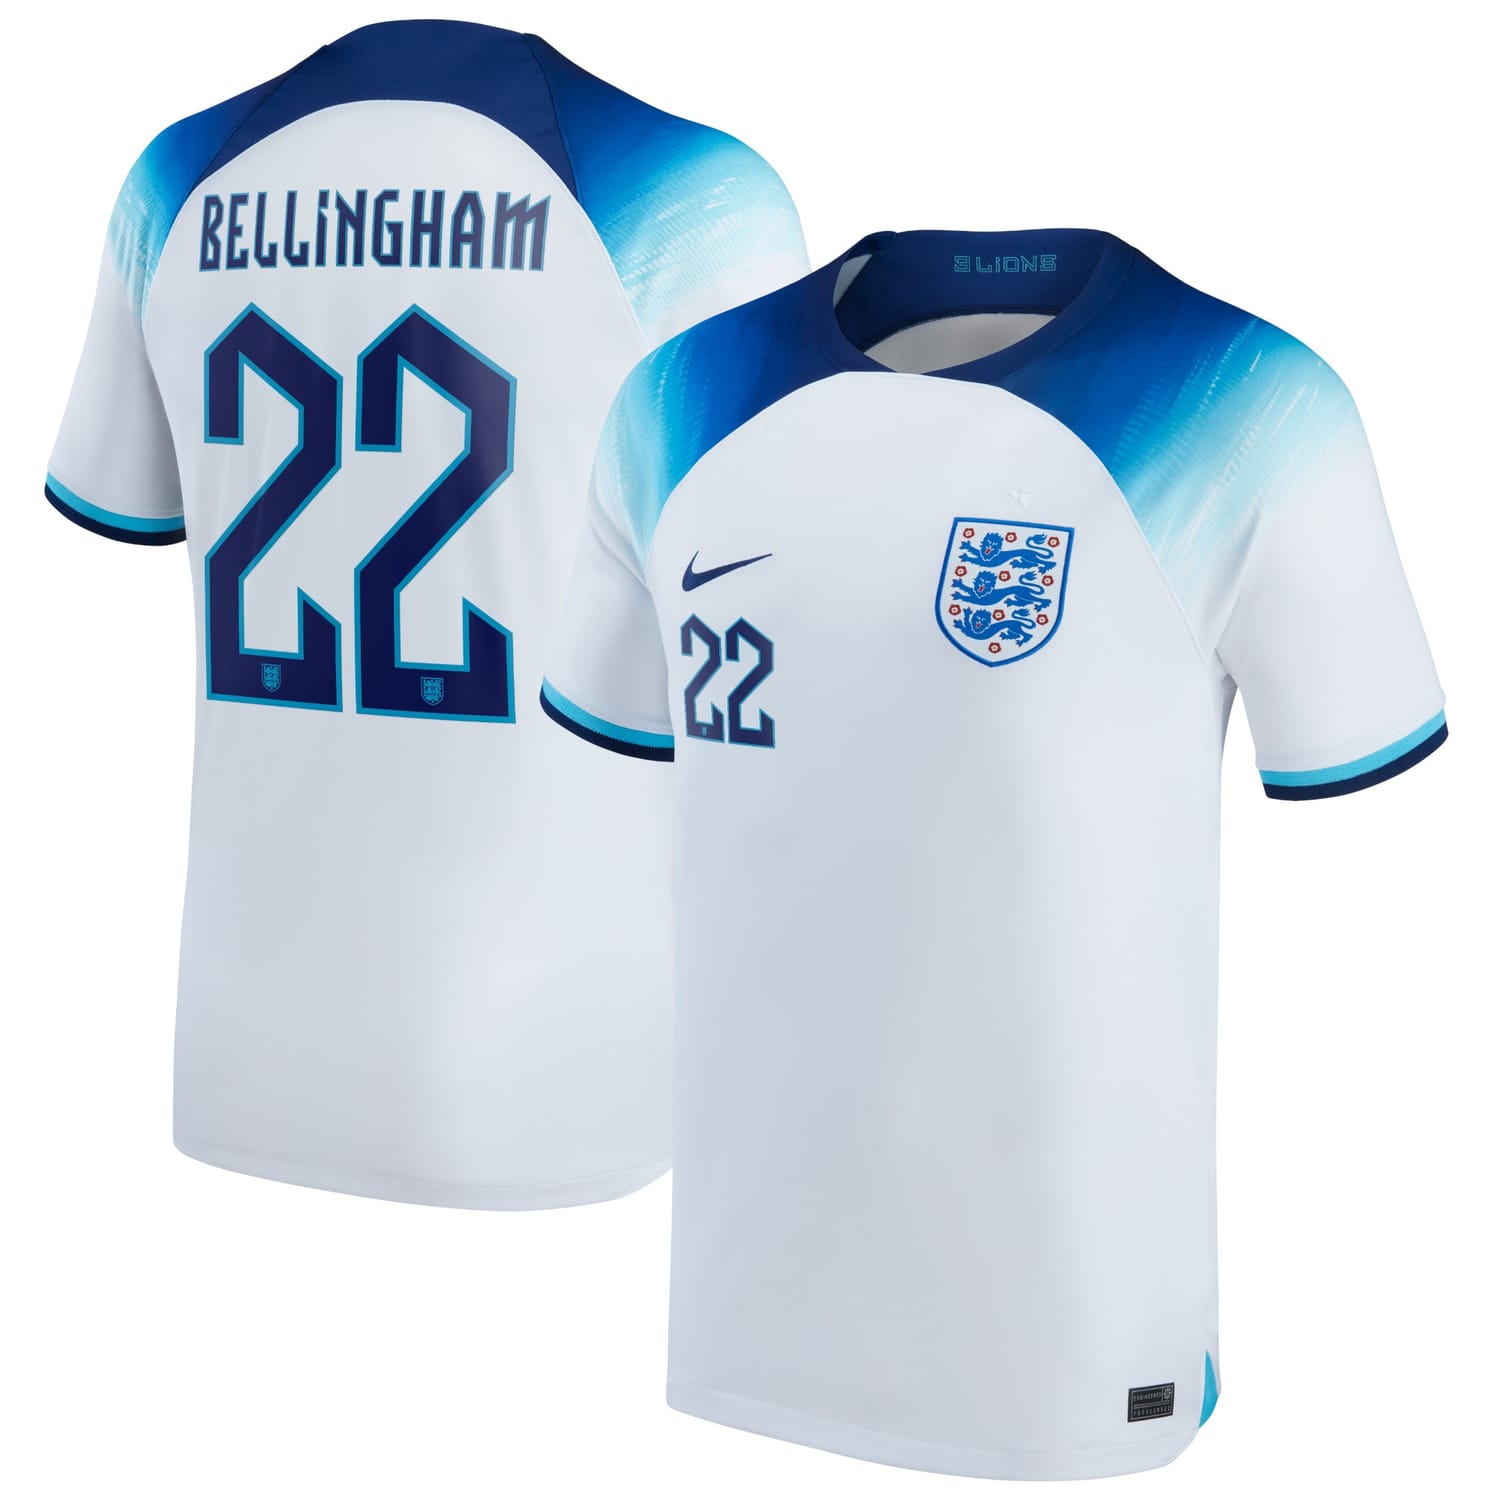 England National Team Home Jersey Shirt 2022 player Jude Bellingham 22 printing for Men